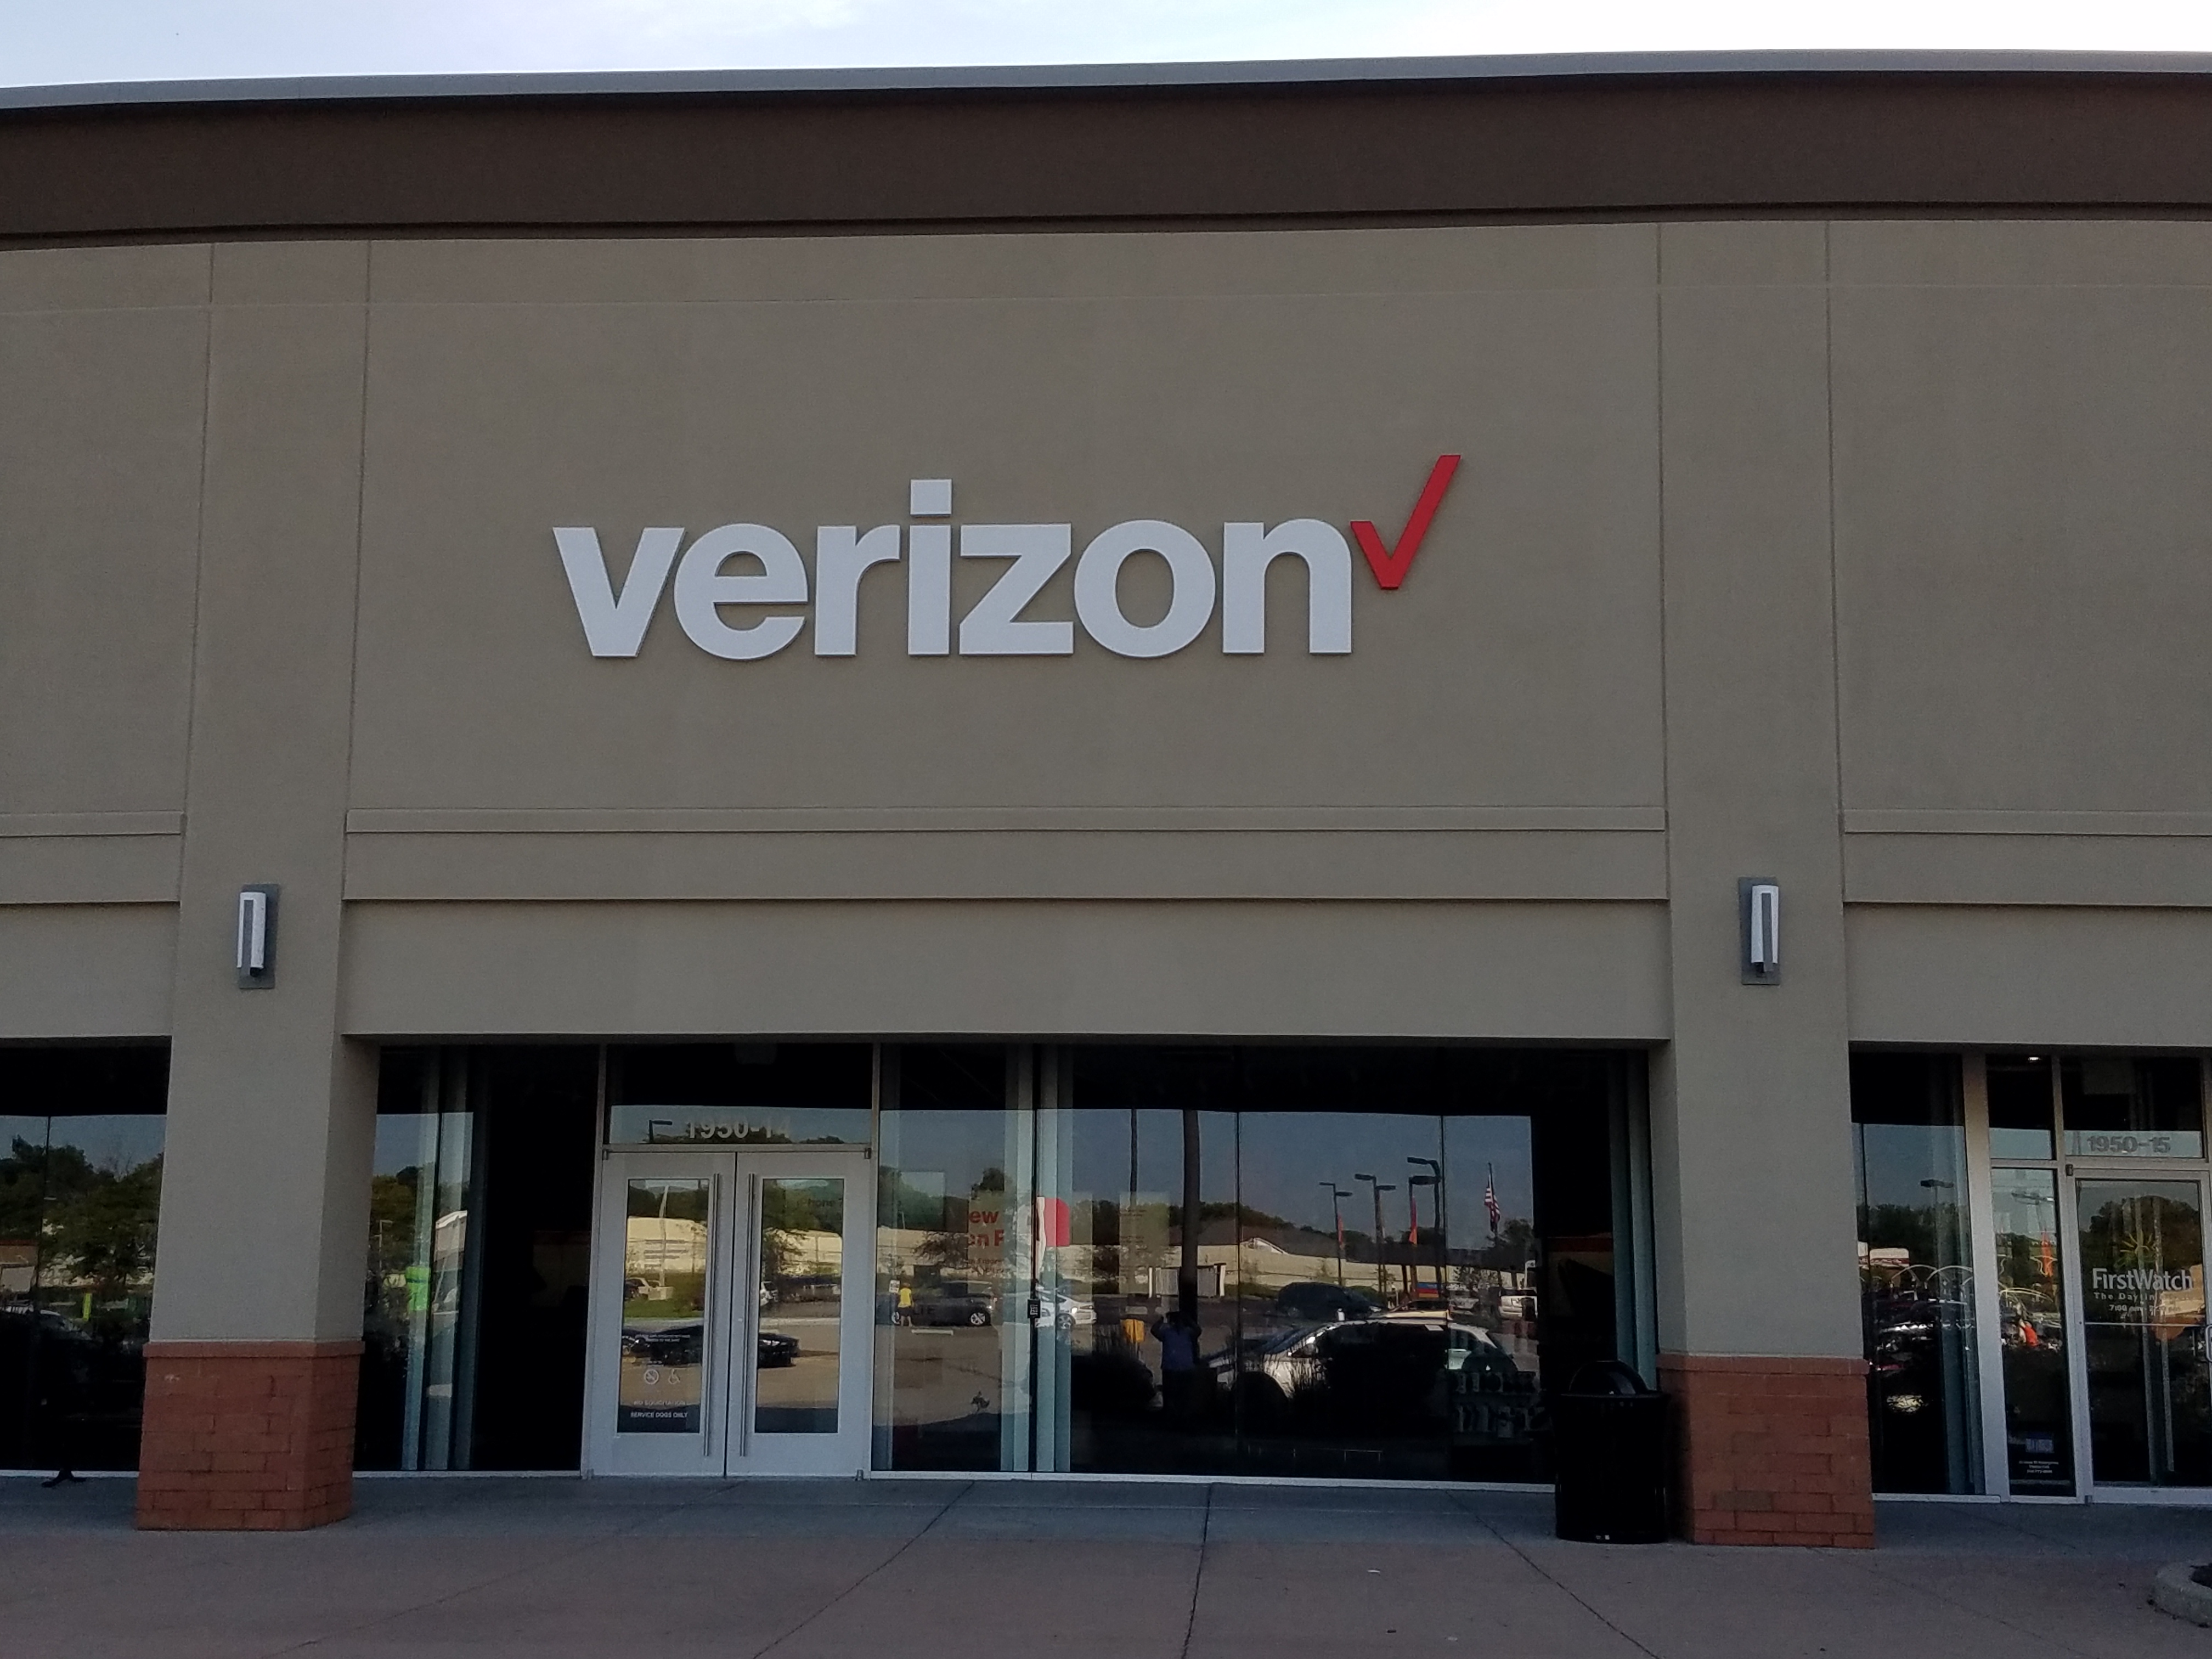 Verizon Coupons near me in Carmel, IN 46033 | 8coupons